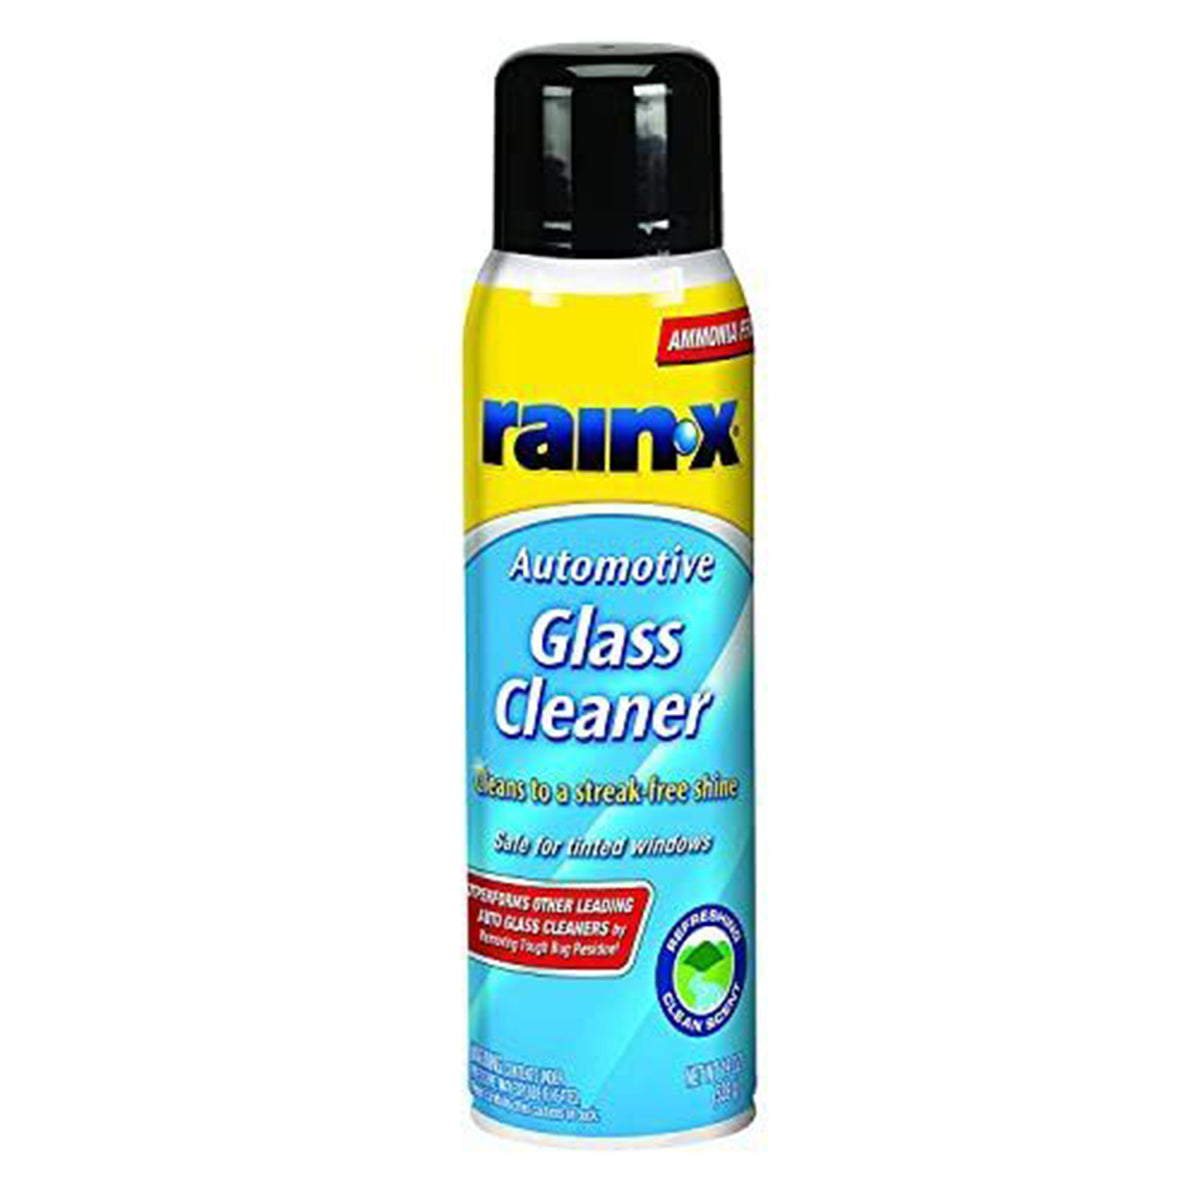 Automotive Glass cleaner aerosol